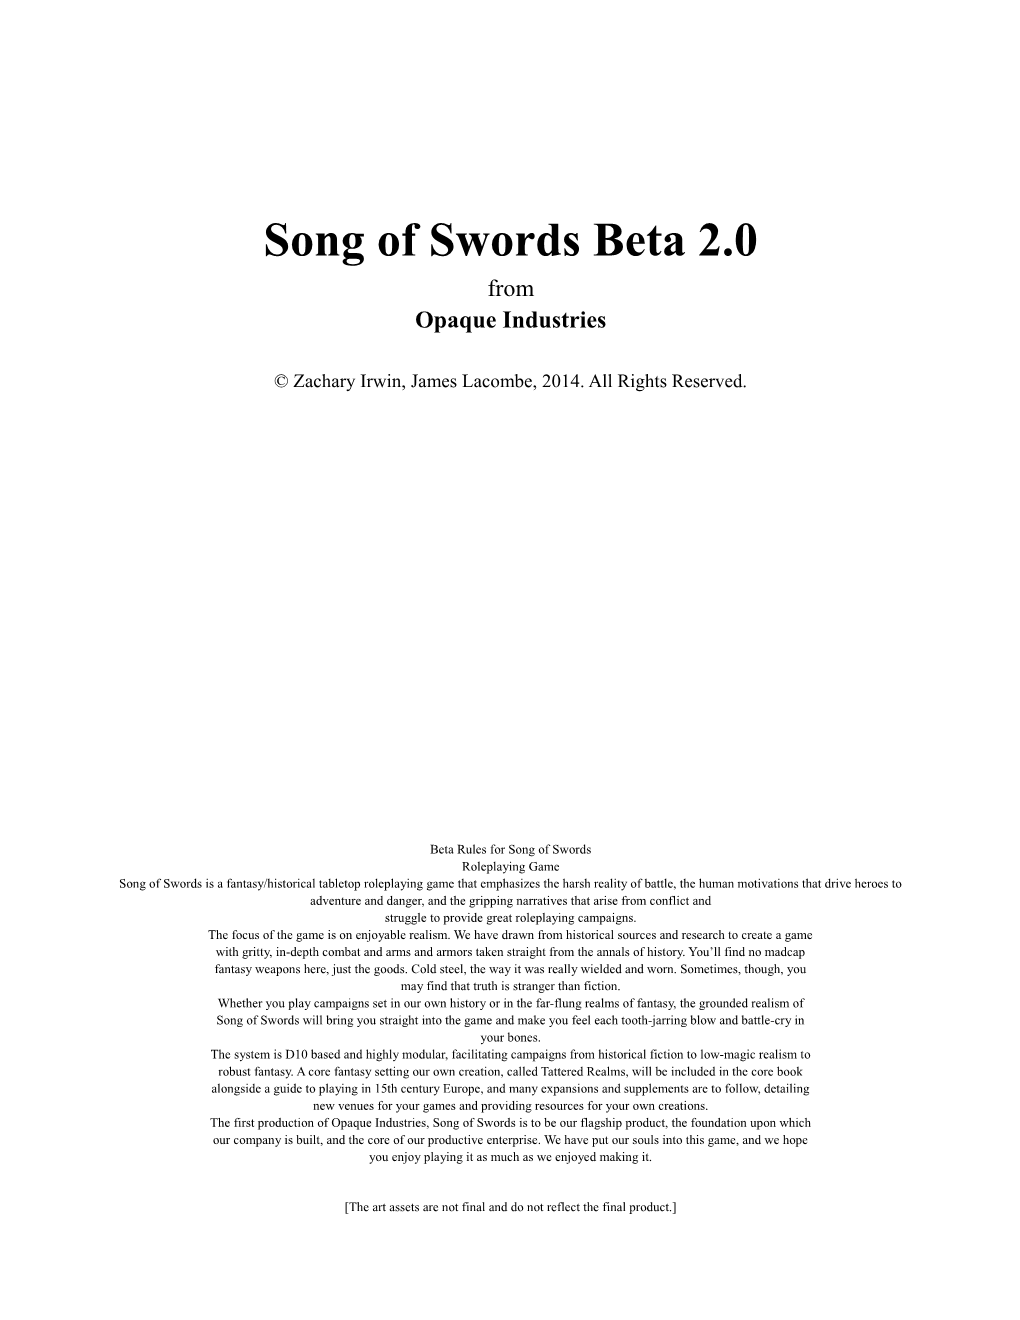 Song of Swords Beta 2.0 from Opaque Industries